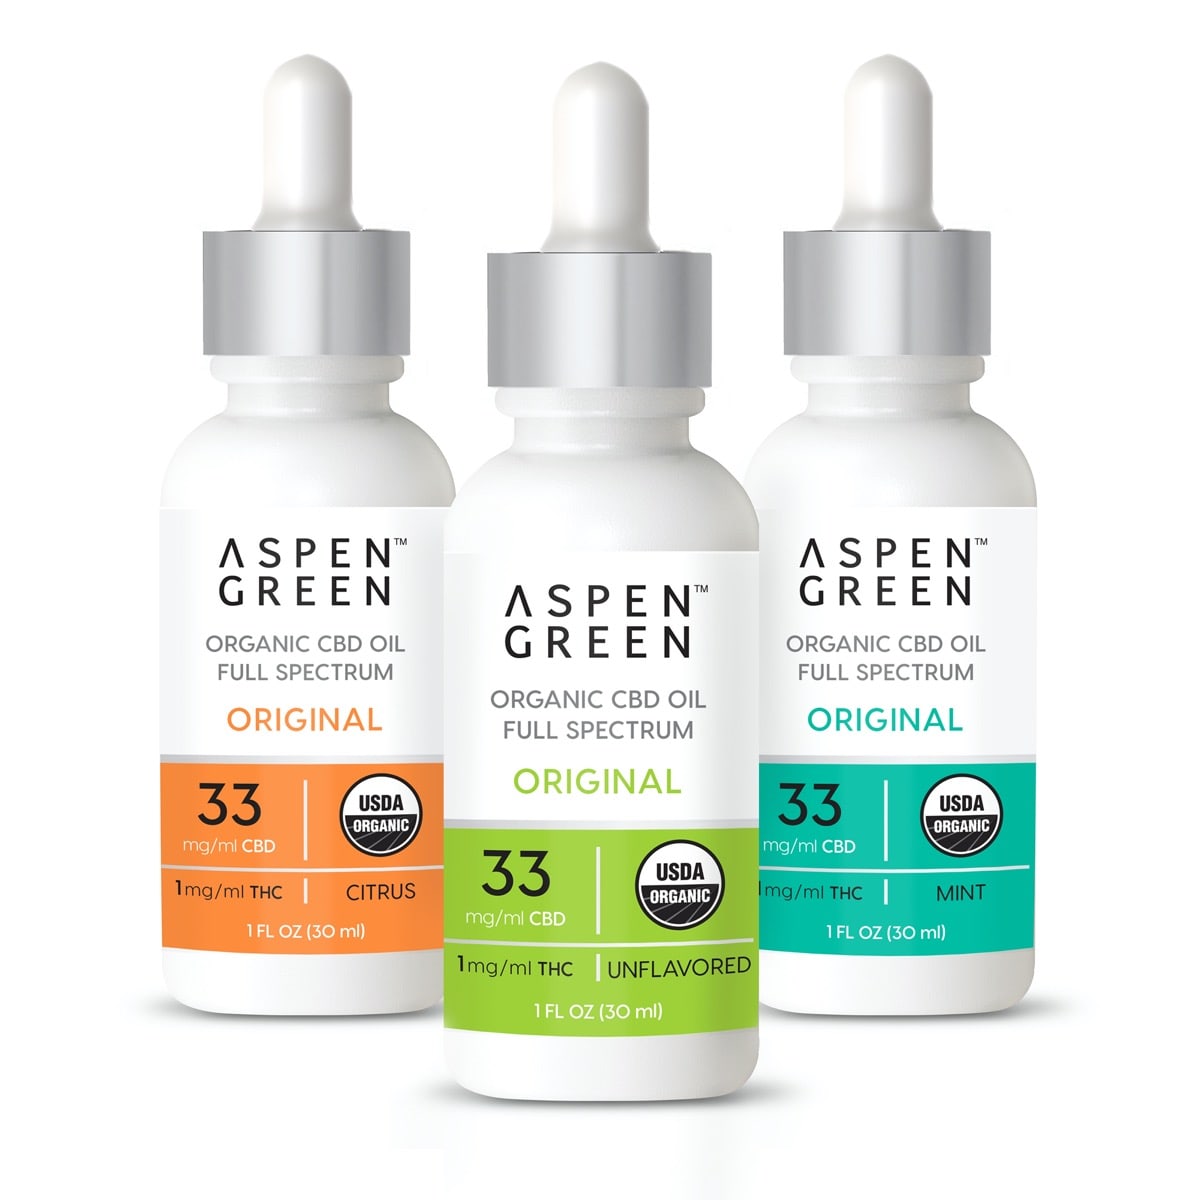 Aspen Green Original Multi-Flavor Organic CBD Oil tinctures